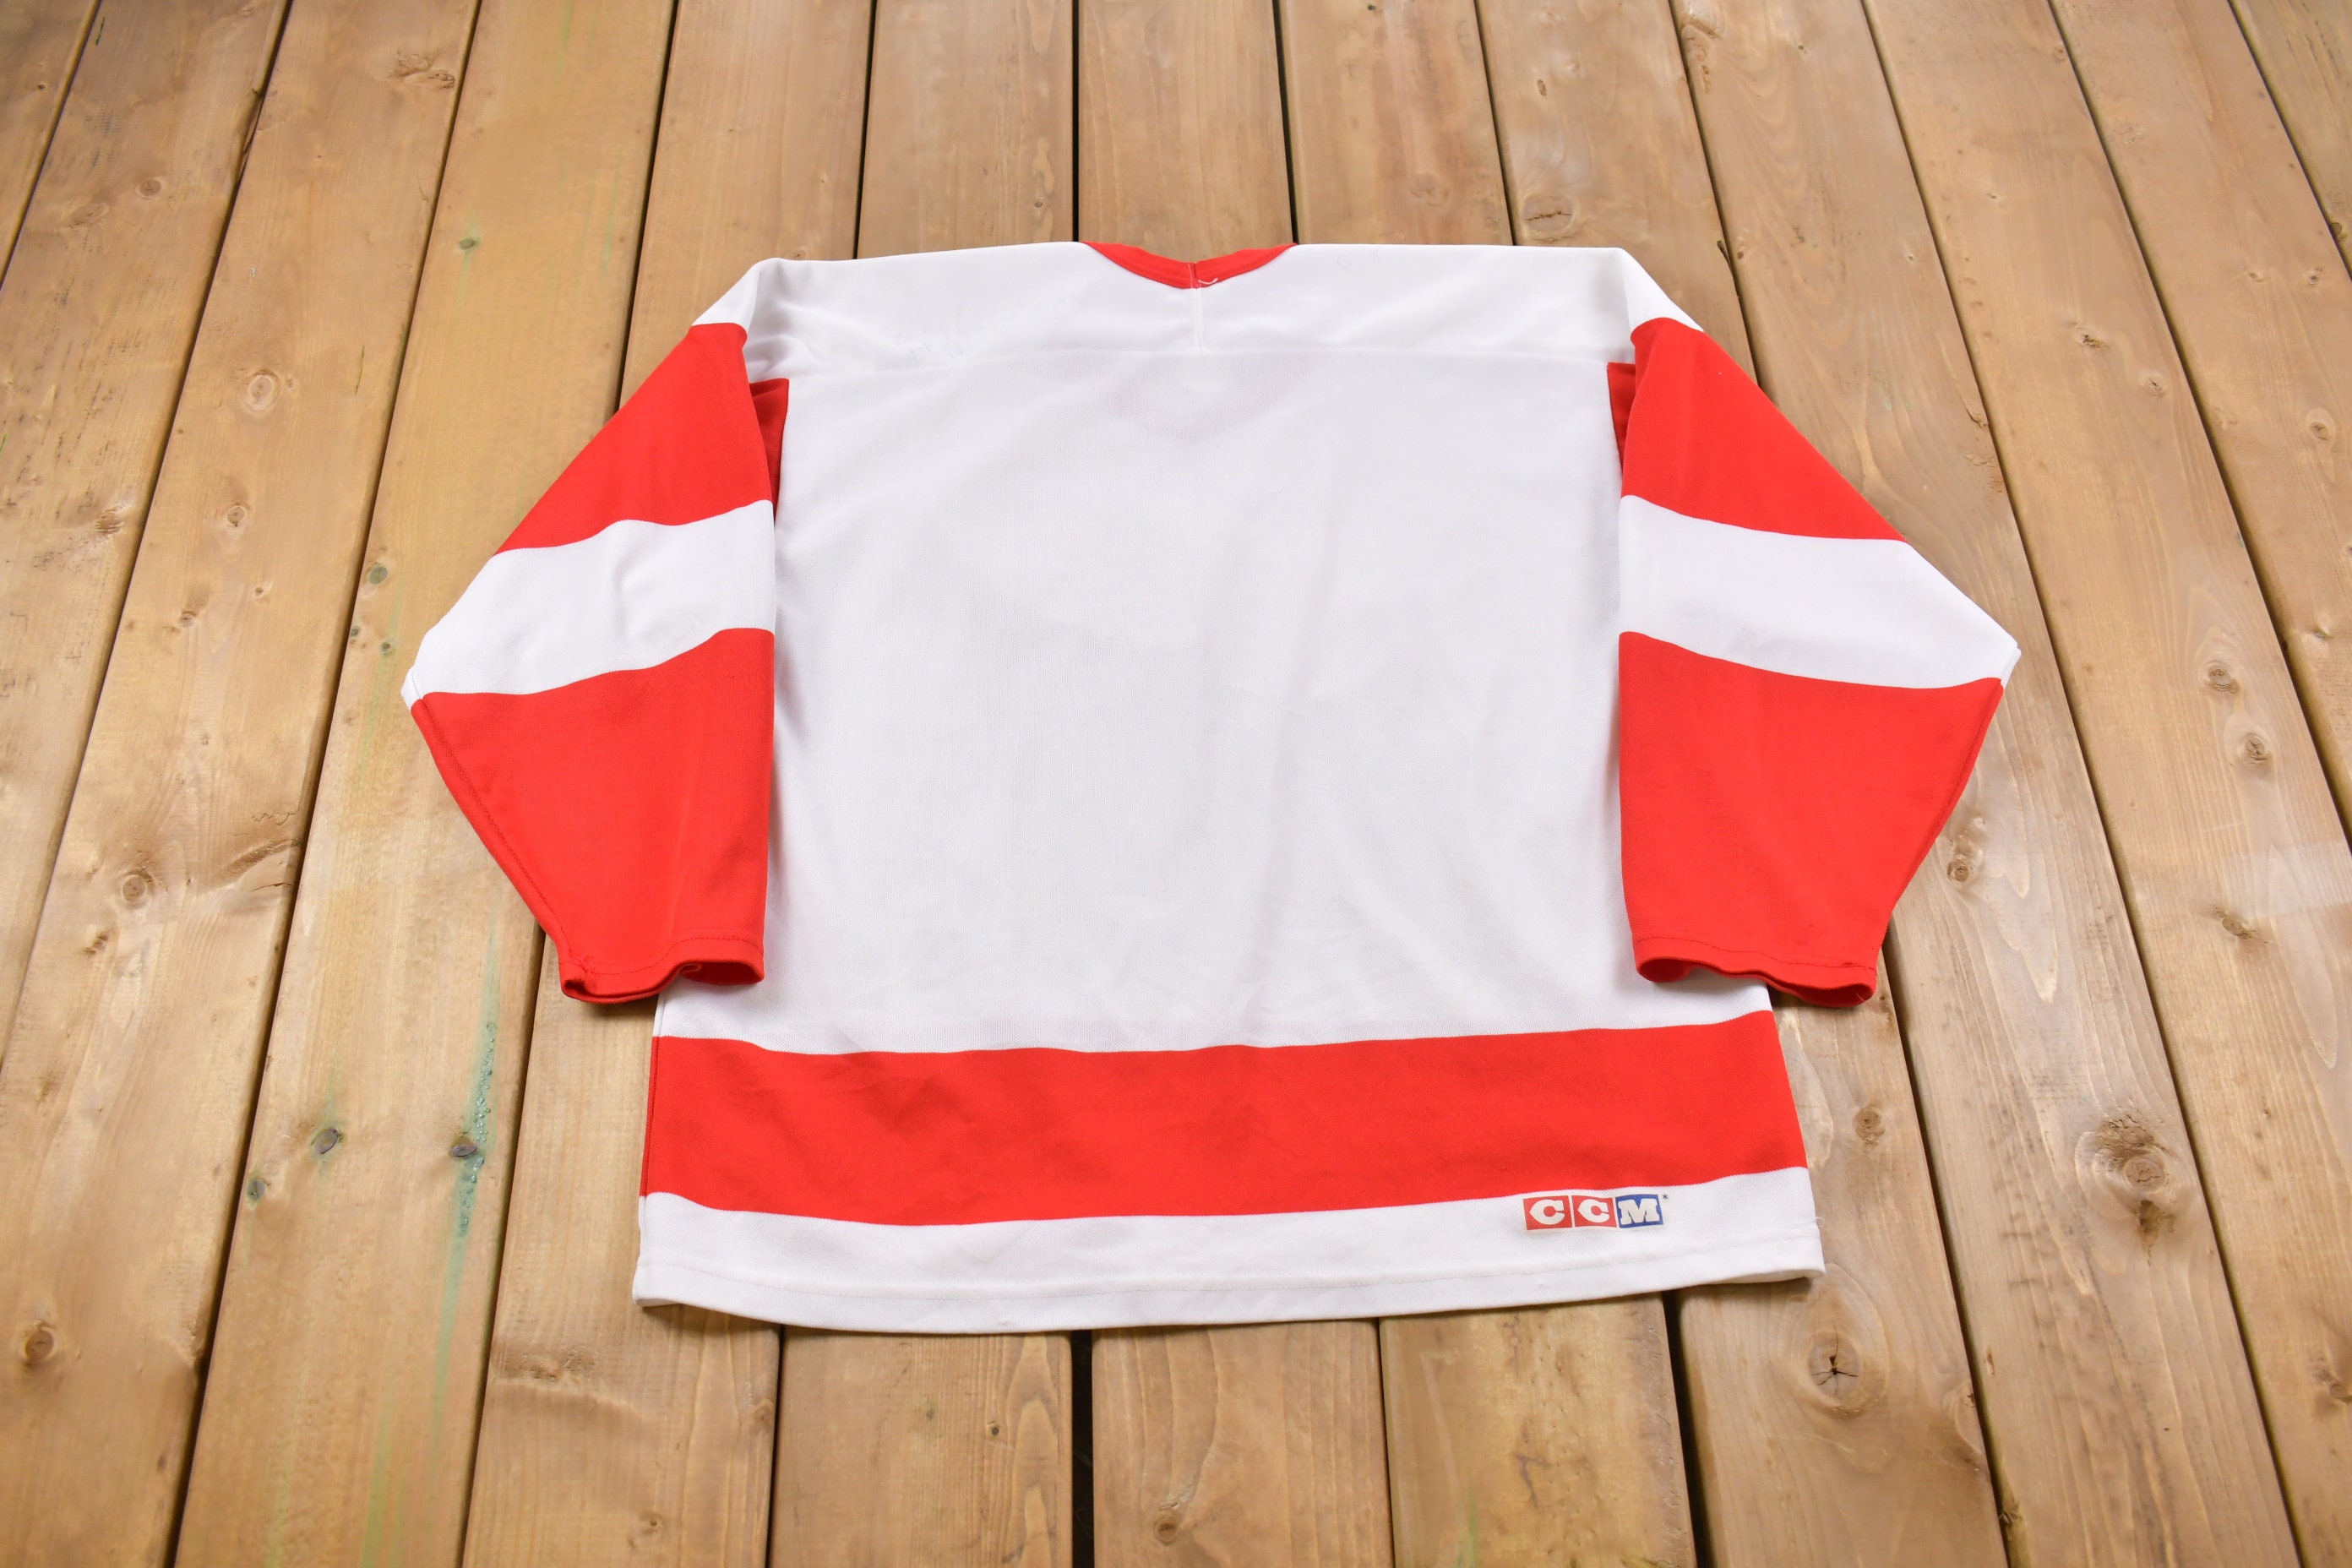 Detroit Red Wings 52 Size Jersey NHL Fan Apparel & Souvenirs for sale